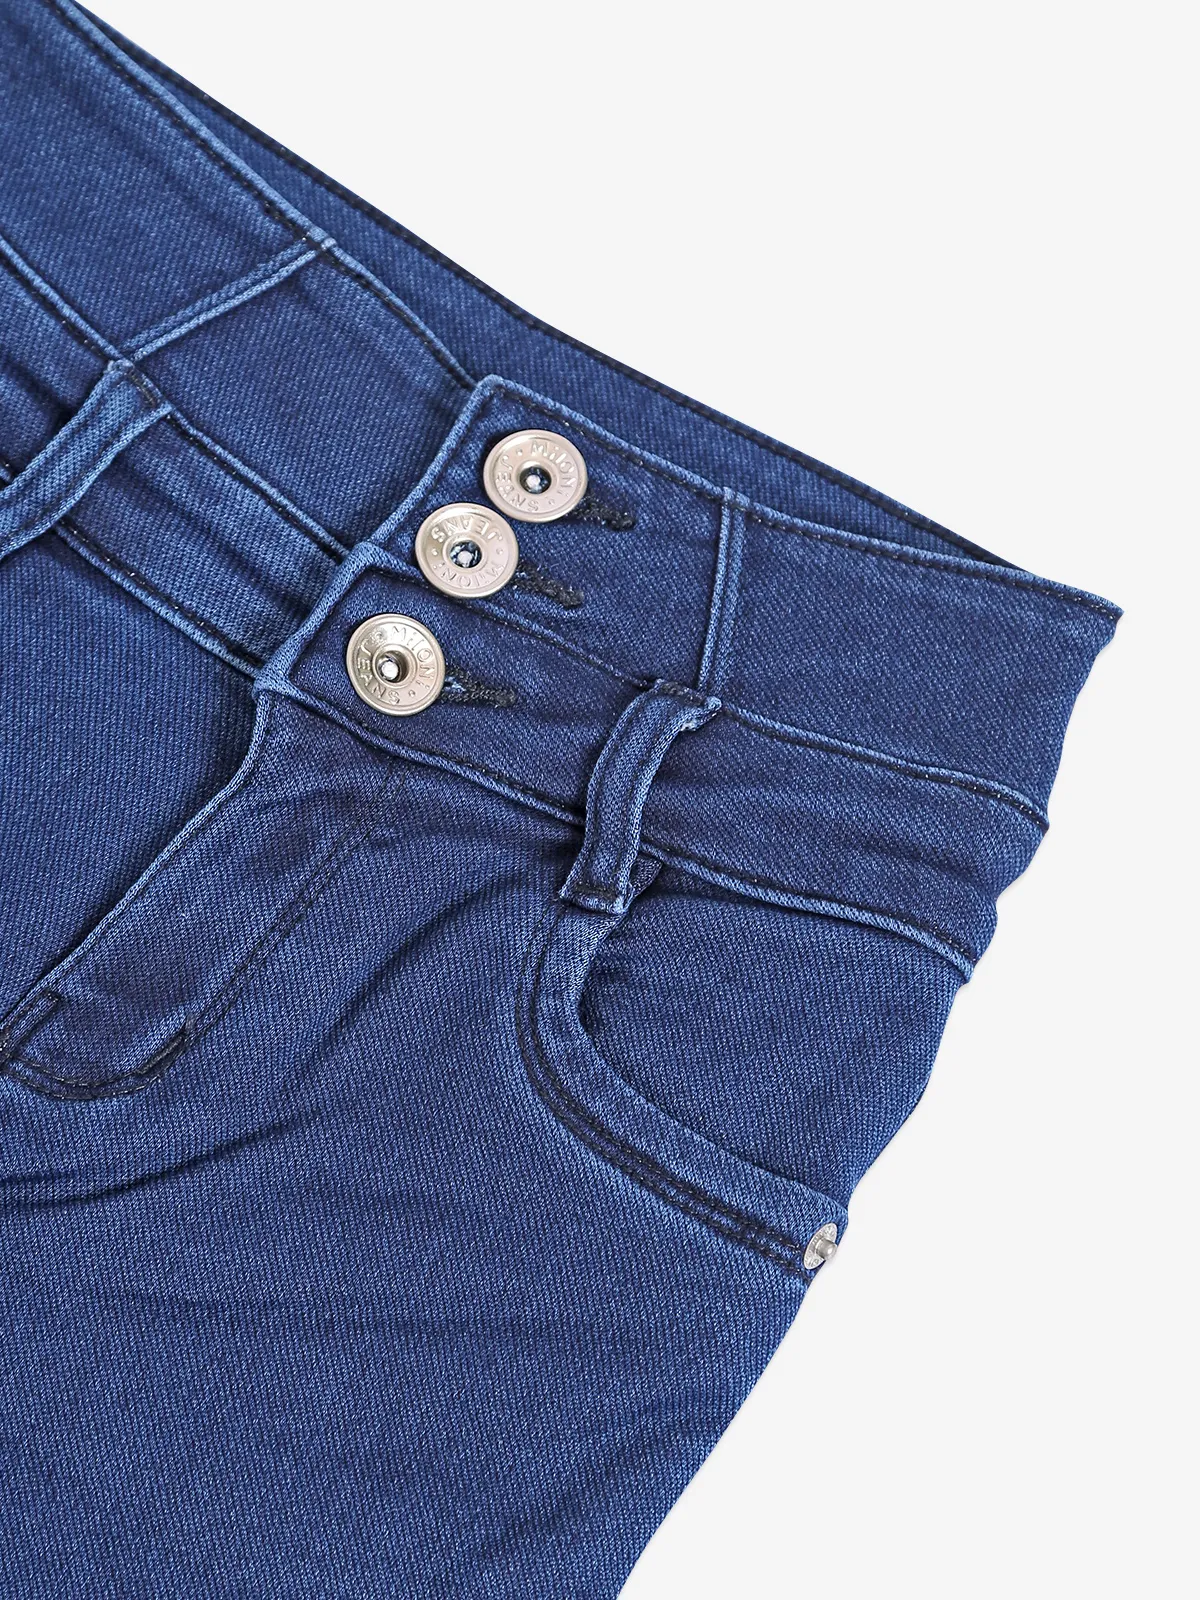 Dark blue denim jeans in solid for girls